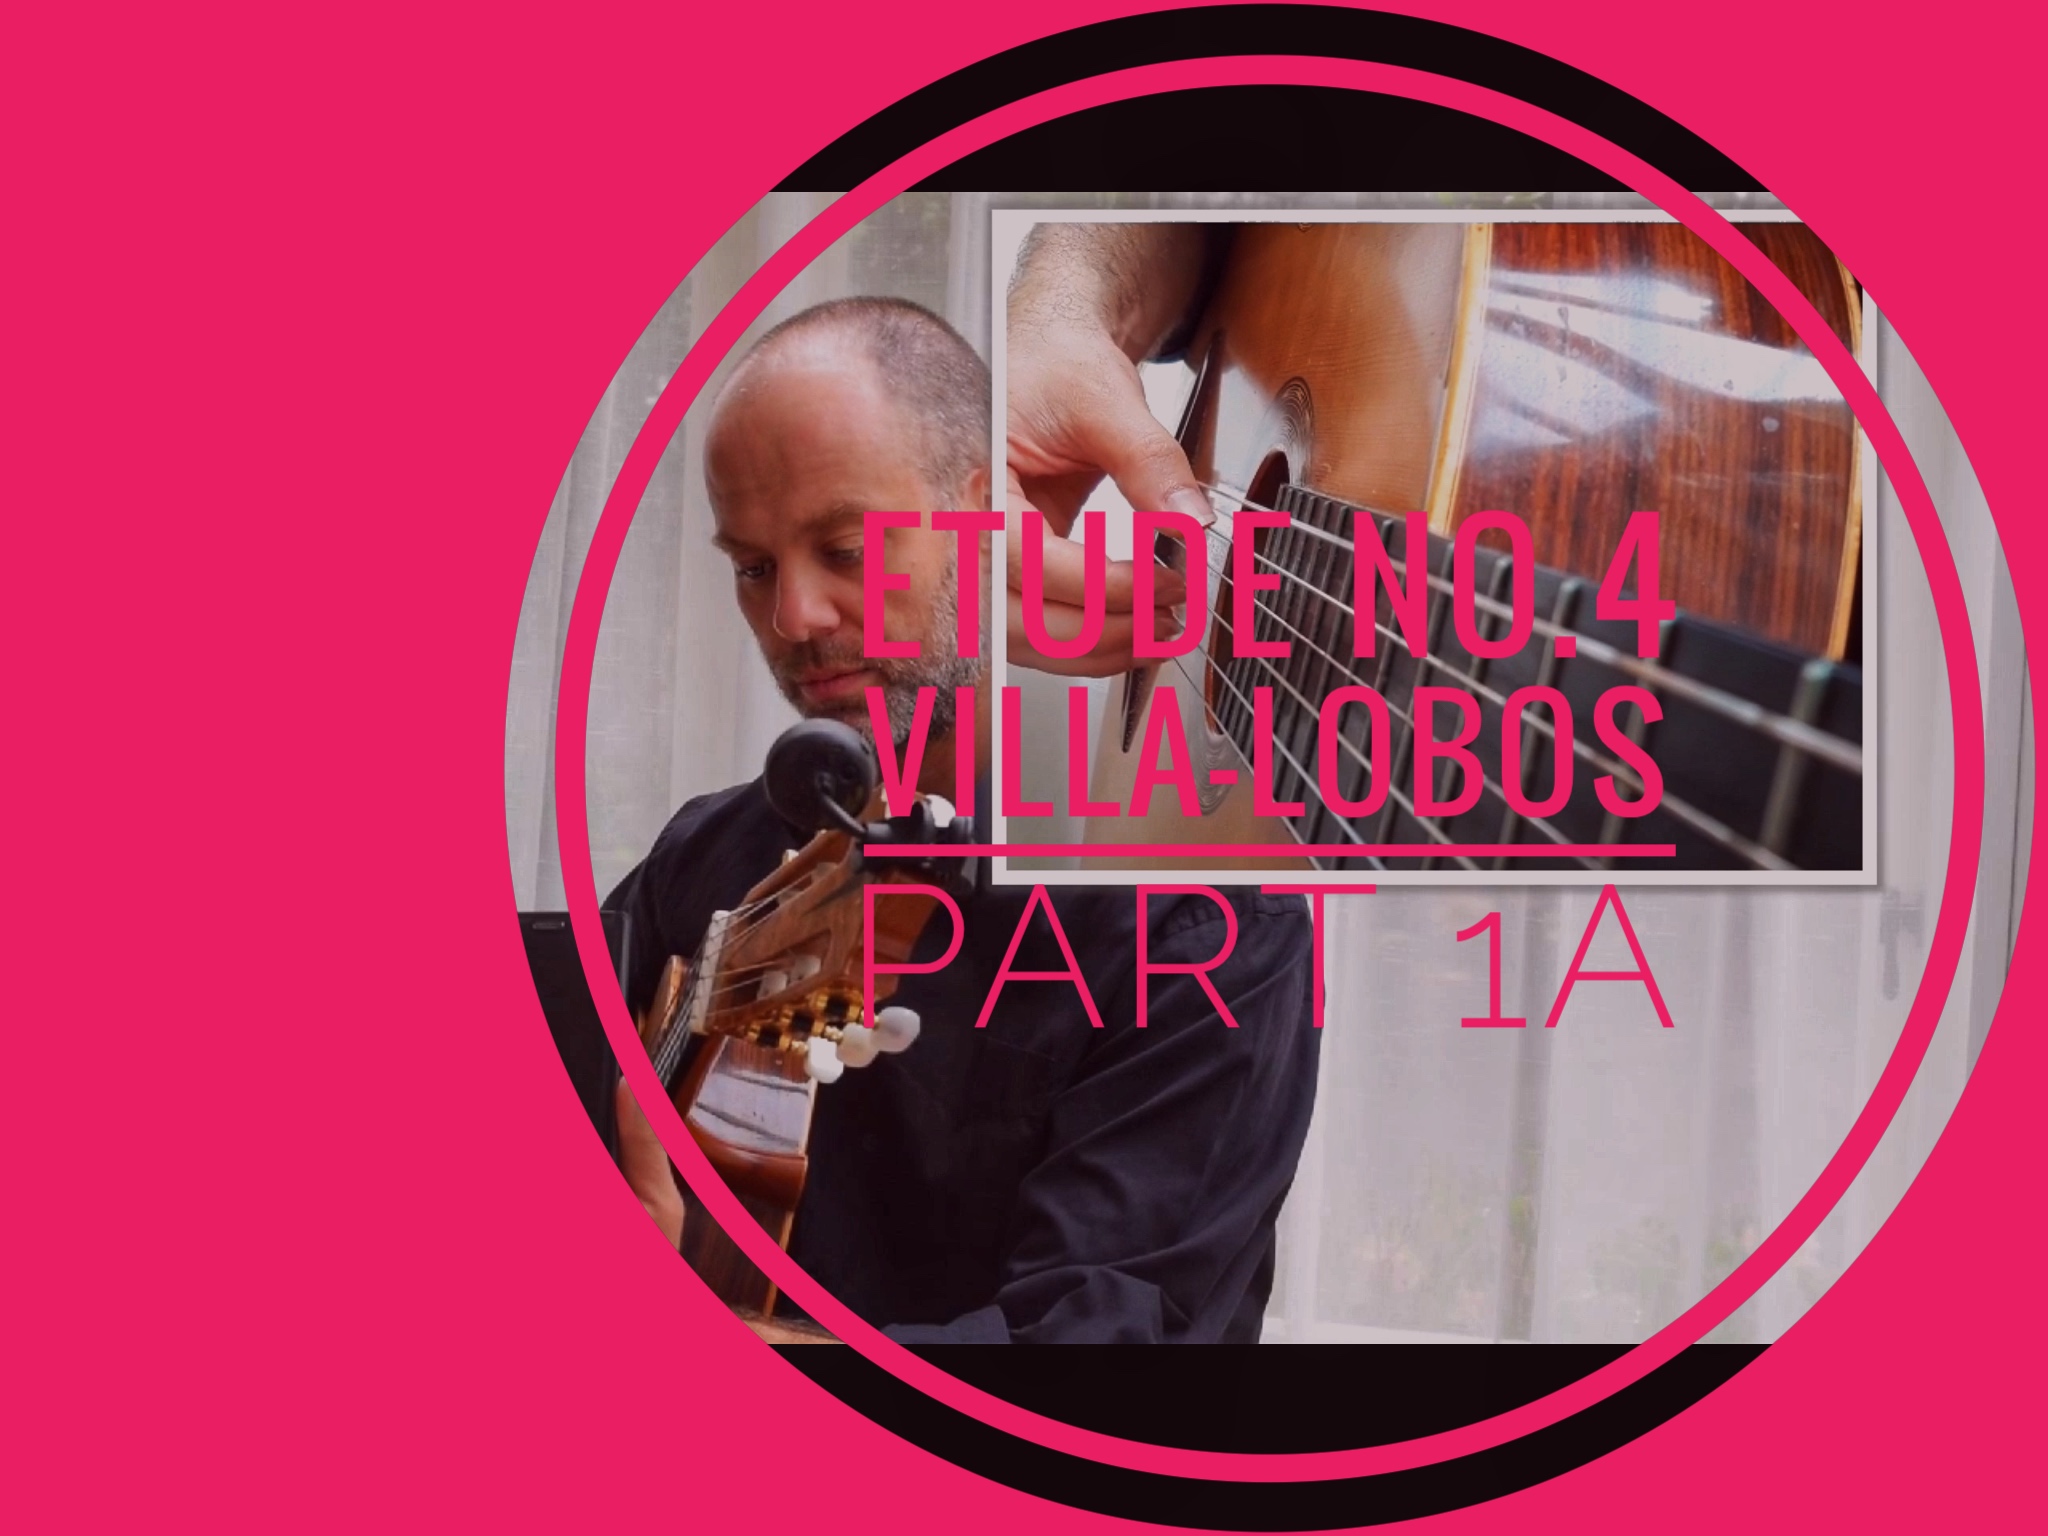 villa-lobos etude 4 classical guitar lesson